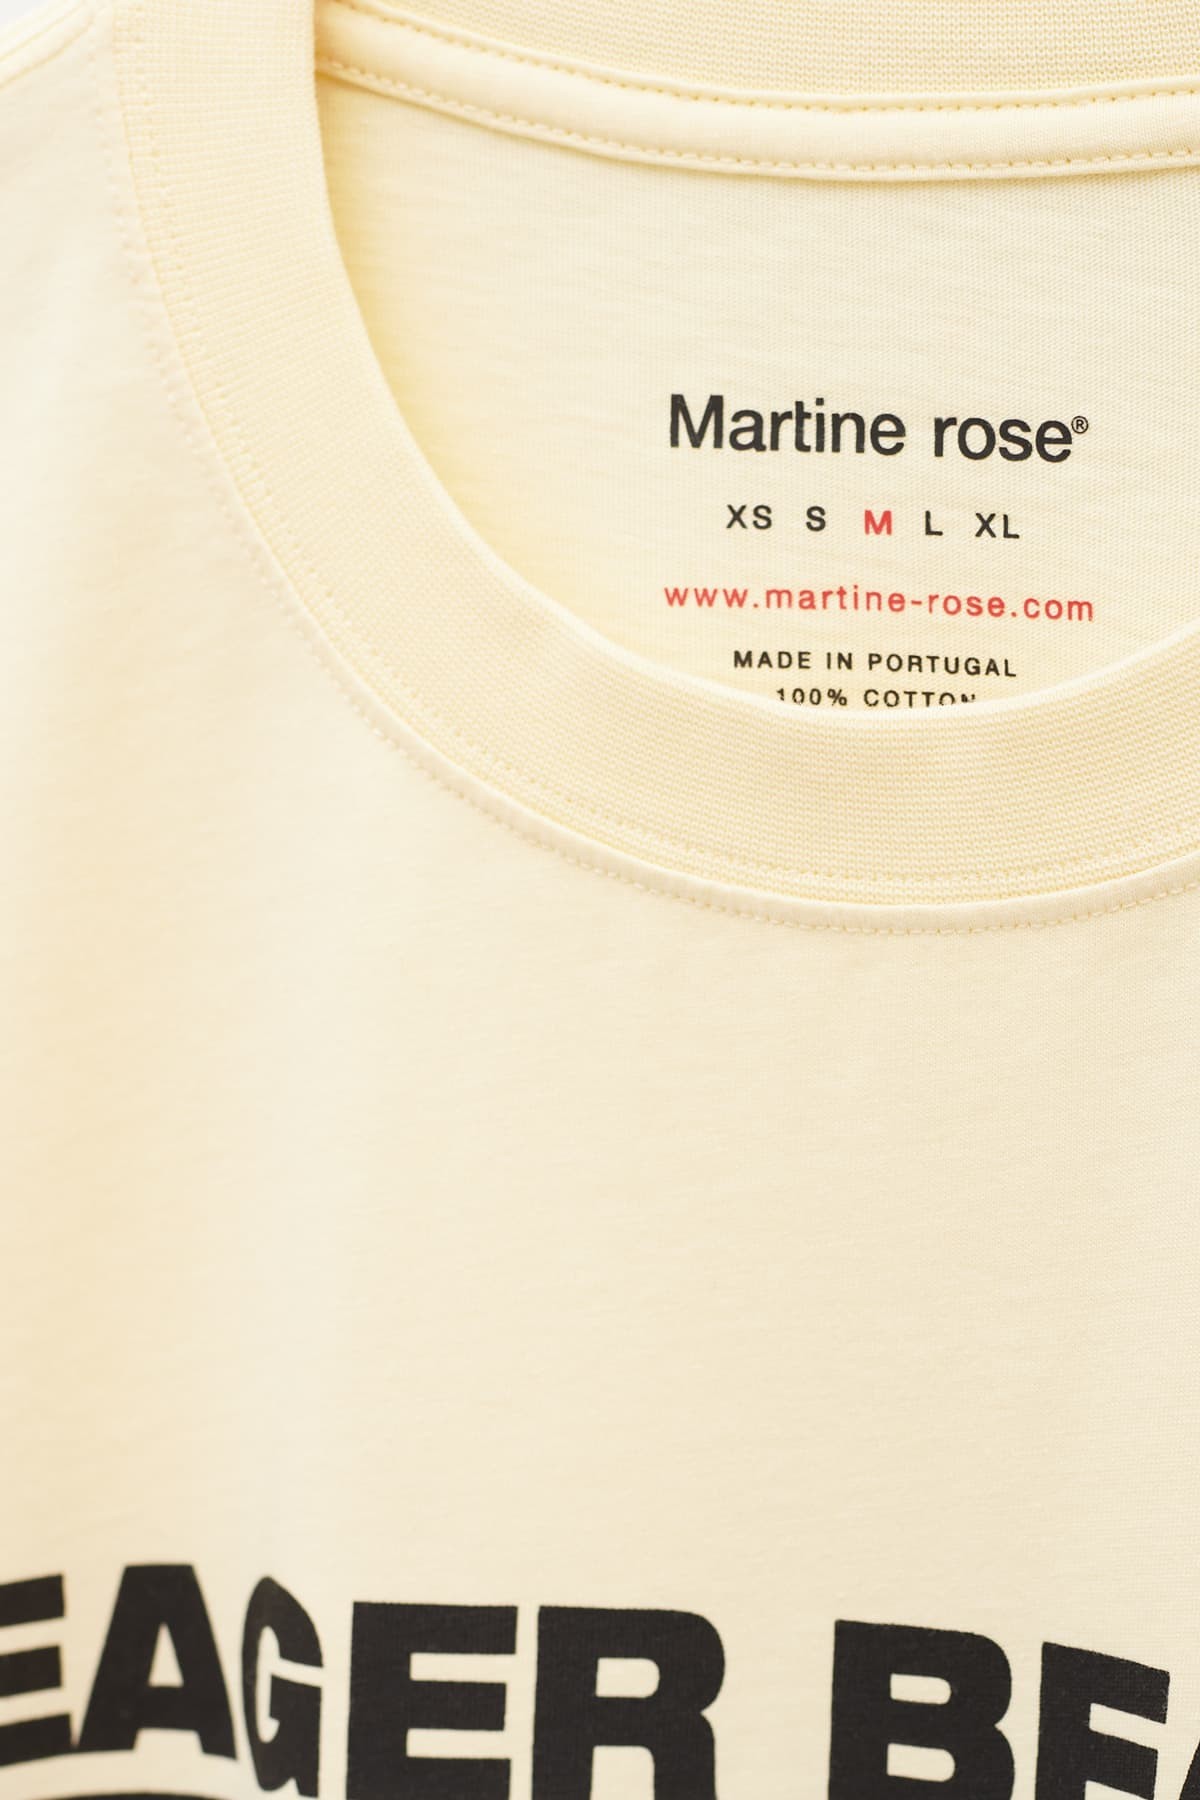 martine rose t shirt